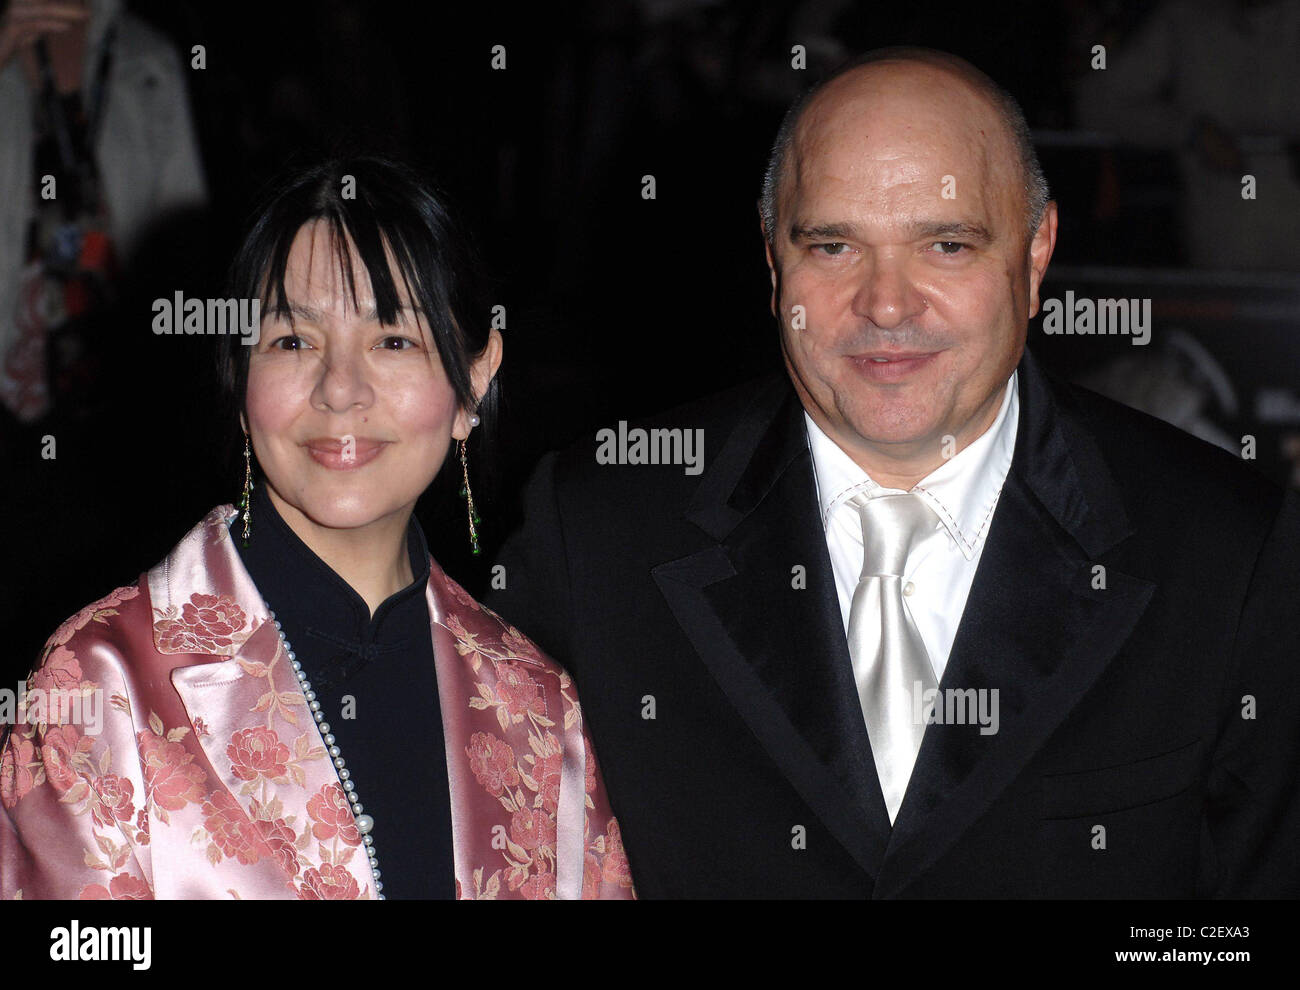 Carolyn Choa y Anthony Minghella La 51ª edición del Times BFI London Film Festival: "Eastern Promises" - gala de apertura, en Londres, Inglaterra. Foto de stock